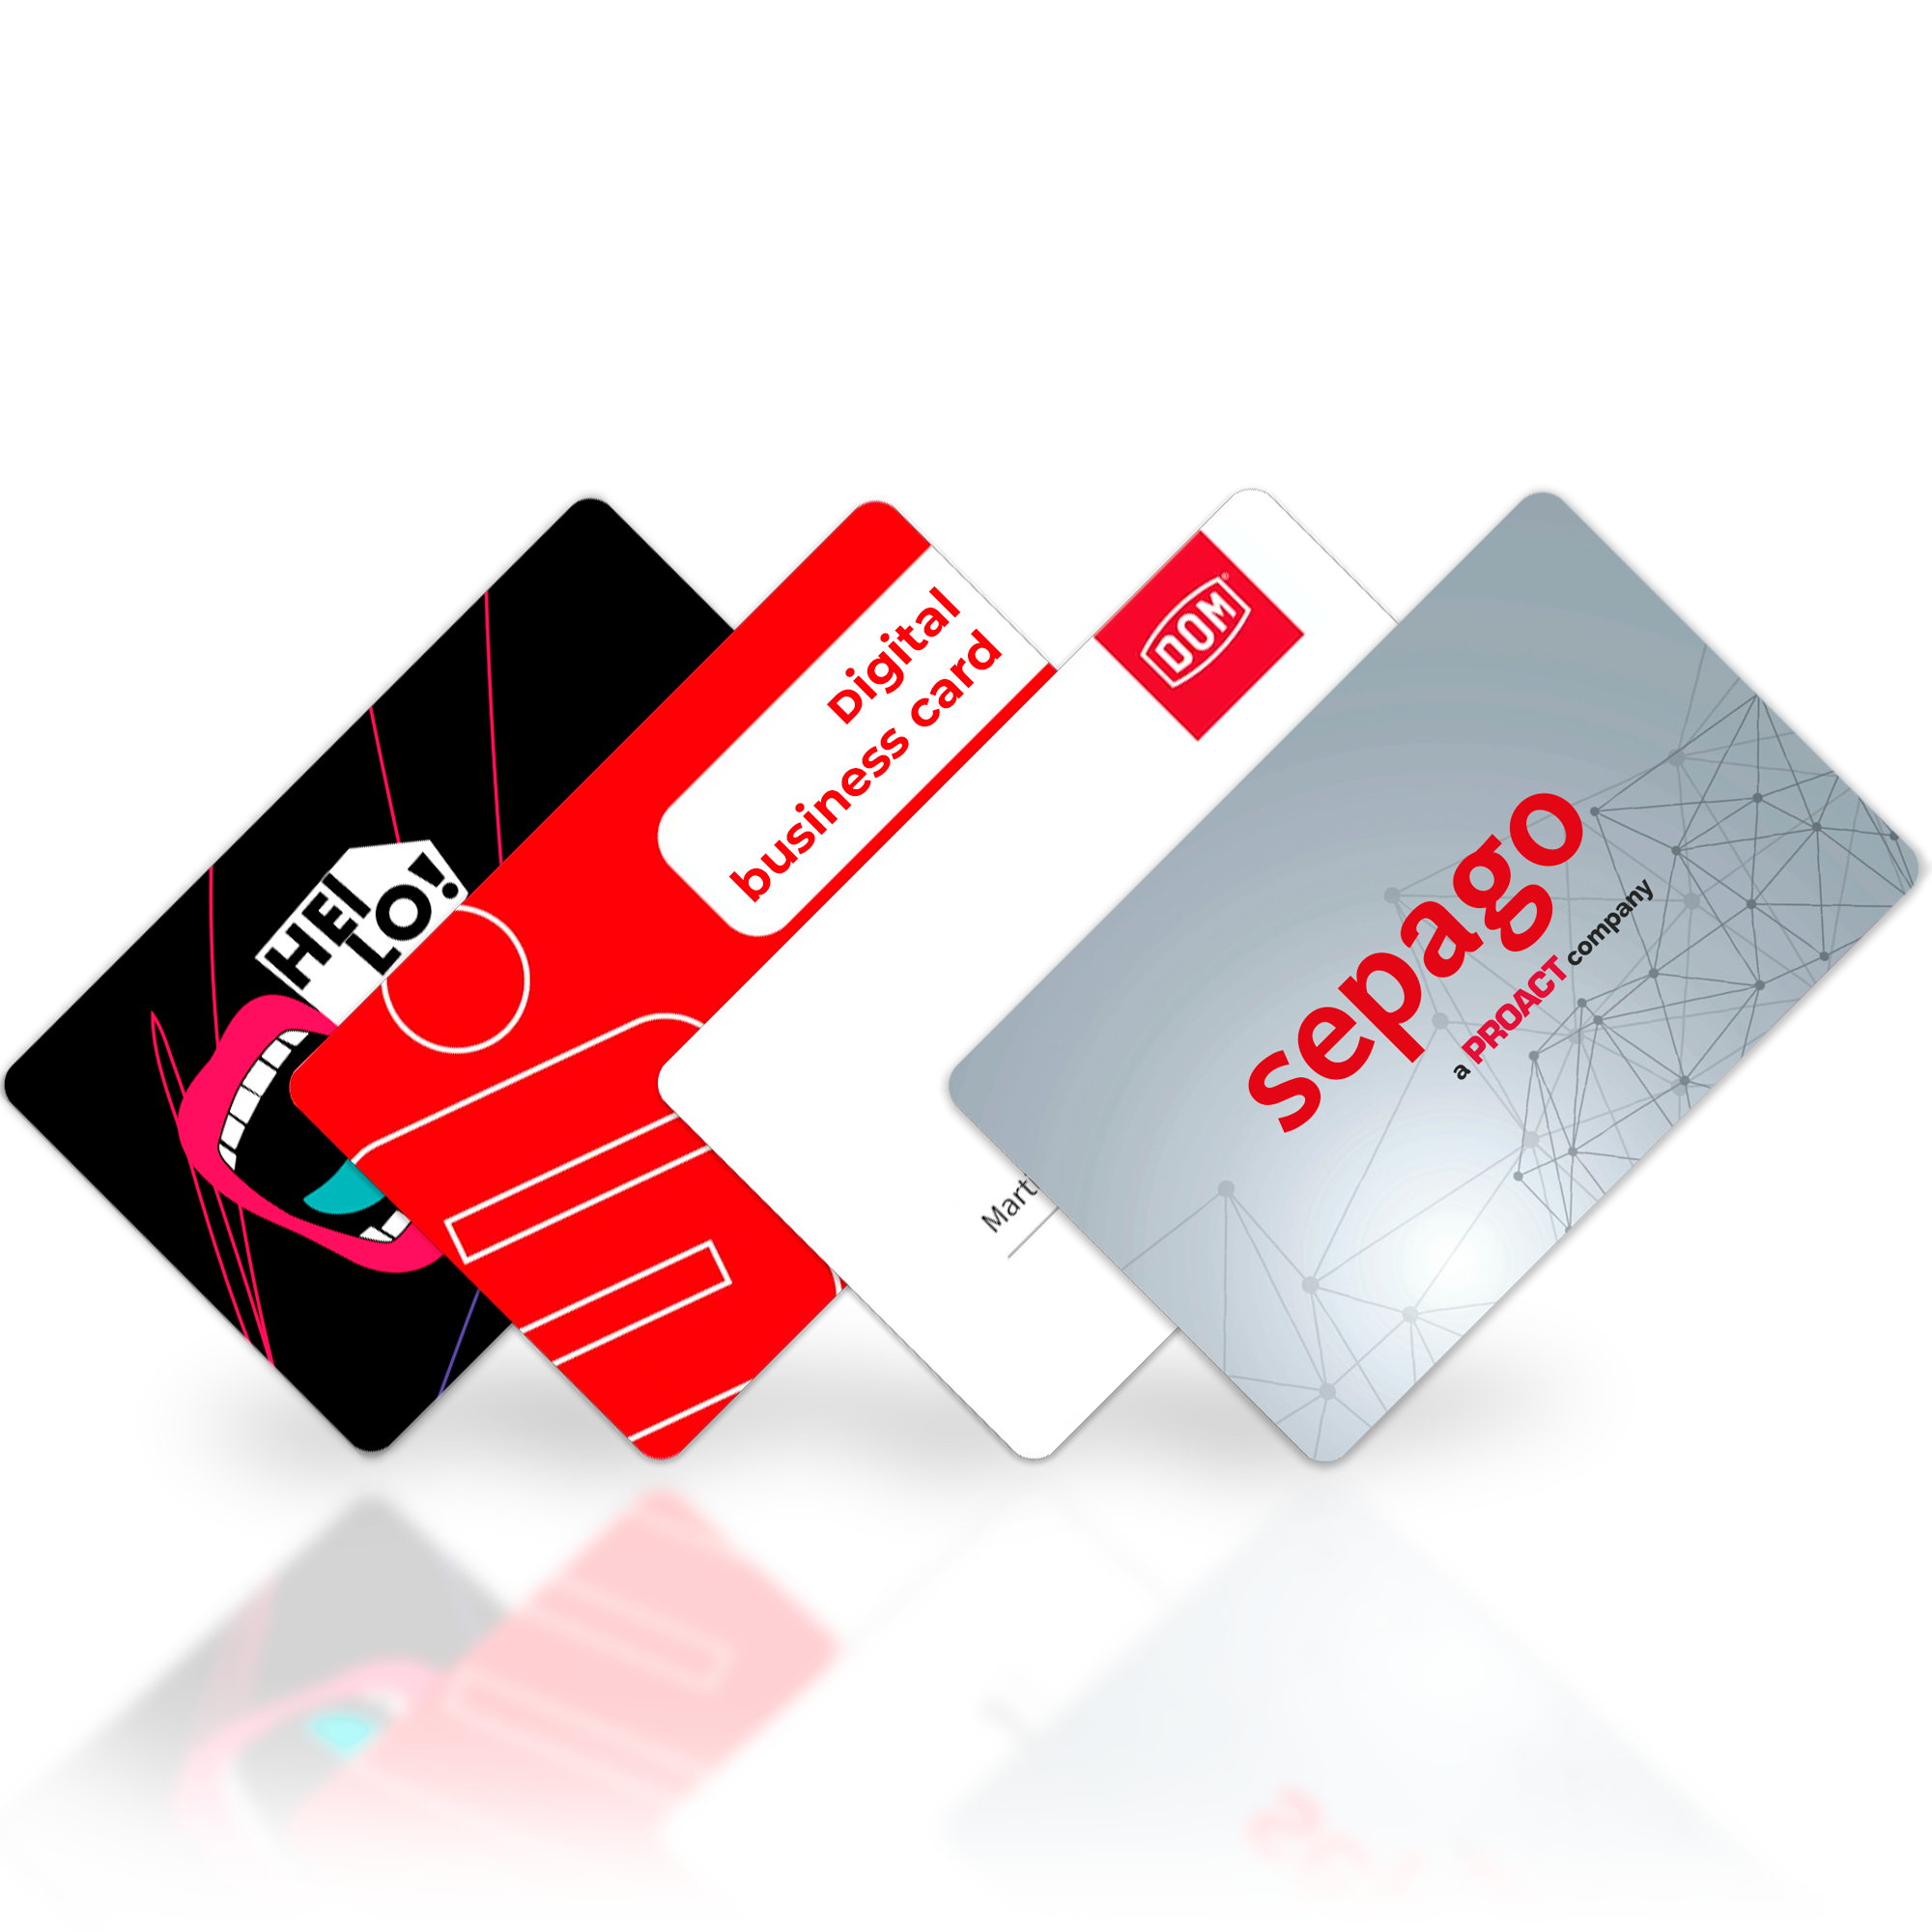 Custom smartcard  (evaluation card) - Digital business card